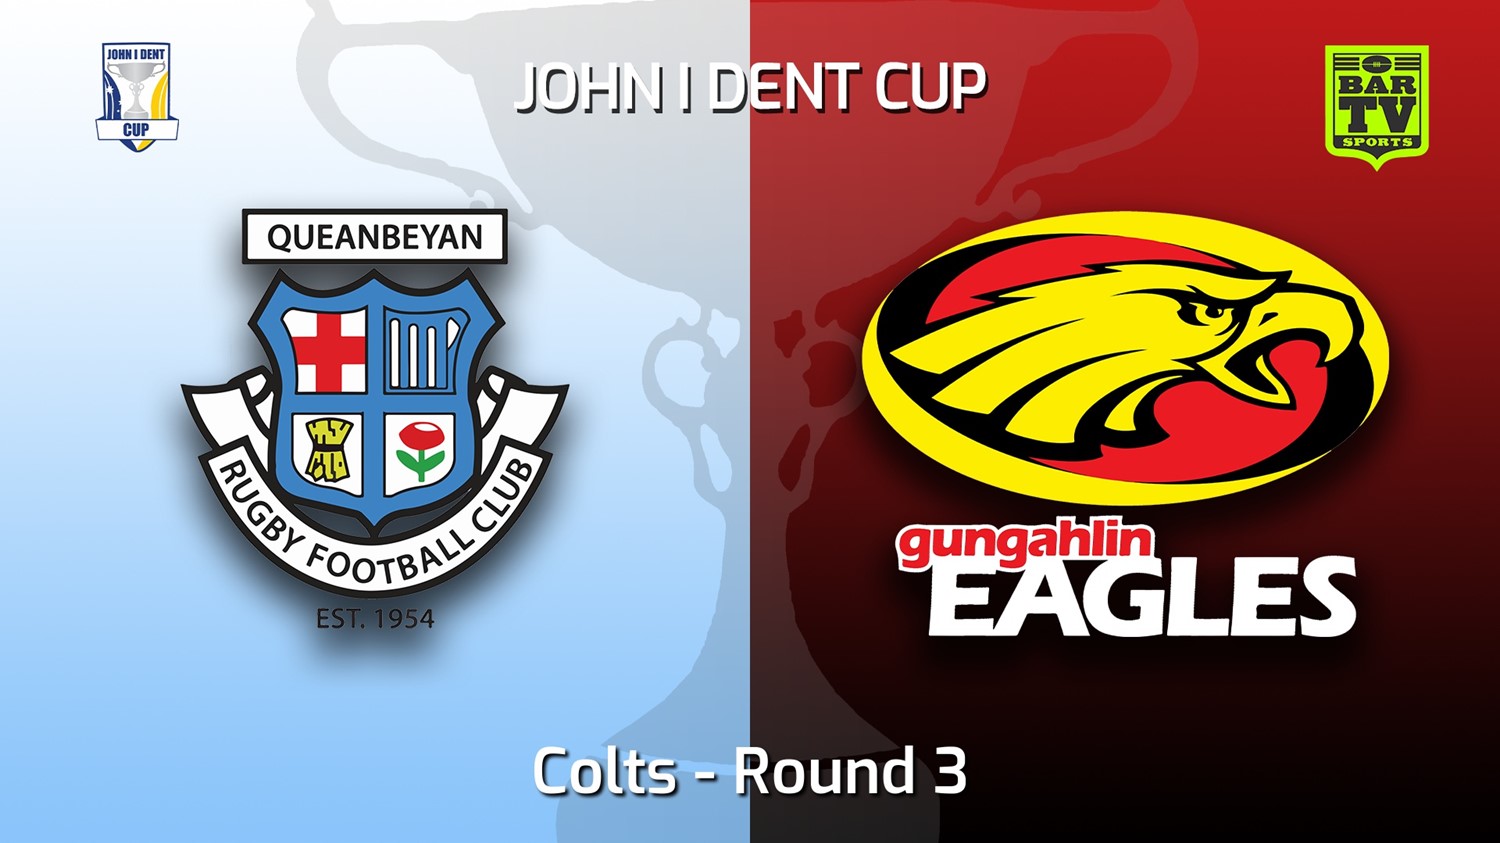 220507-John I Dent (ACT) Round 3 - Colts - Queanbeyan Whites v Gungahlin Eagles Slate Image